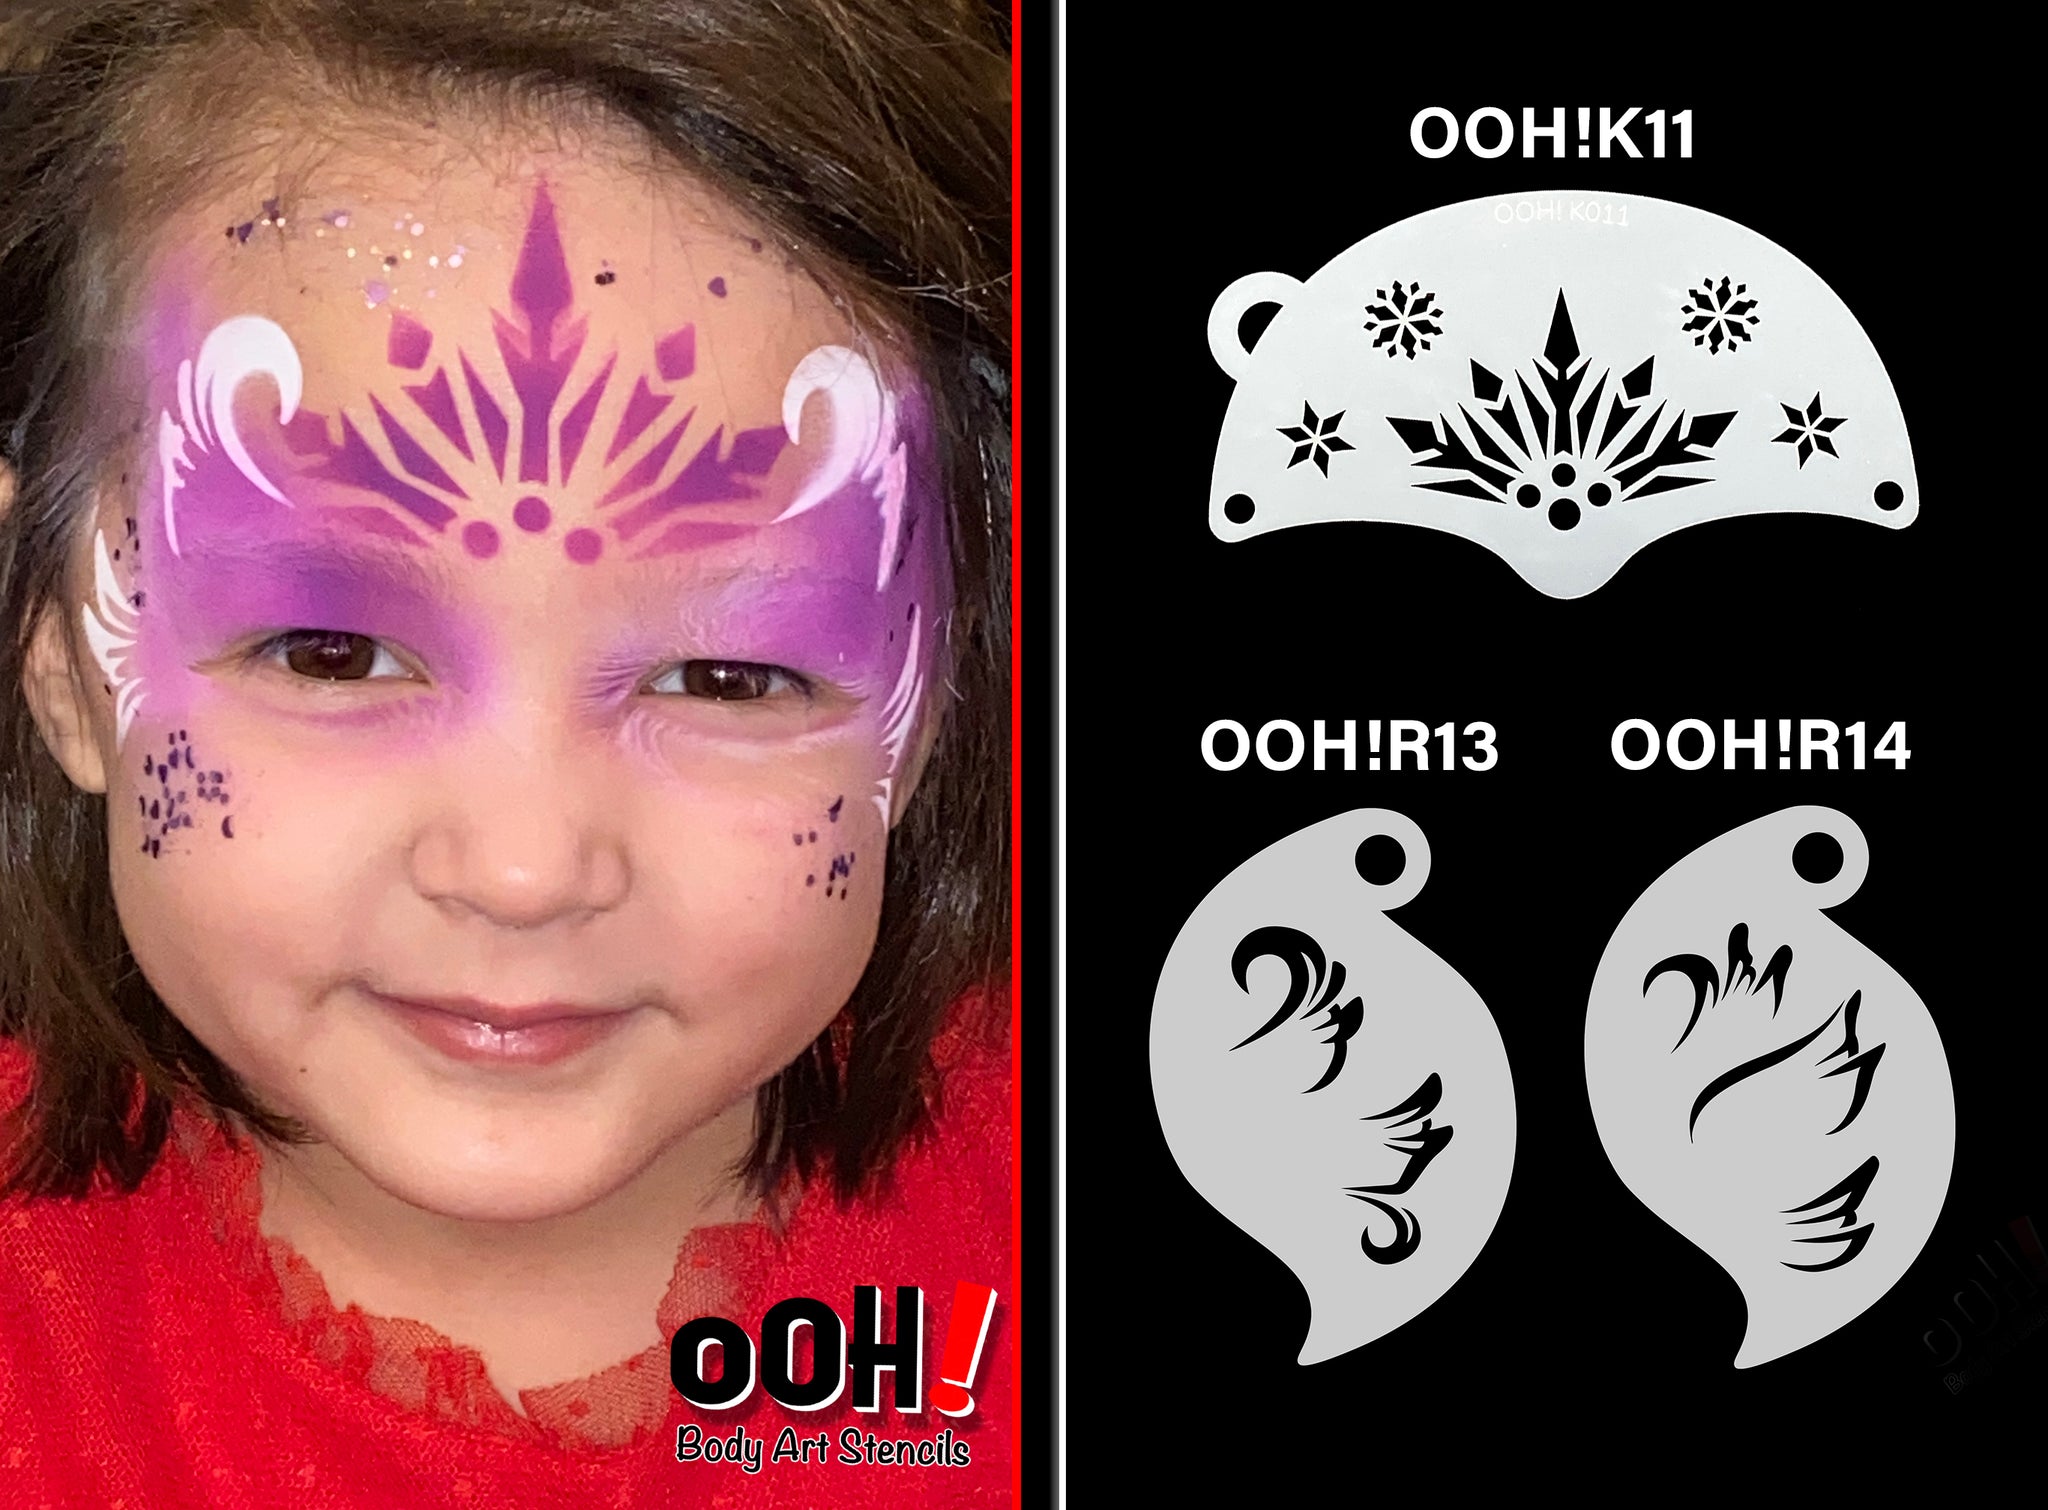 Ooh! Mask Stencil - Snowflake Queen